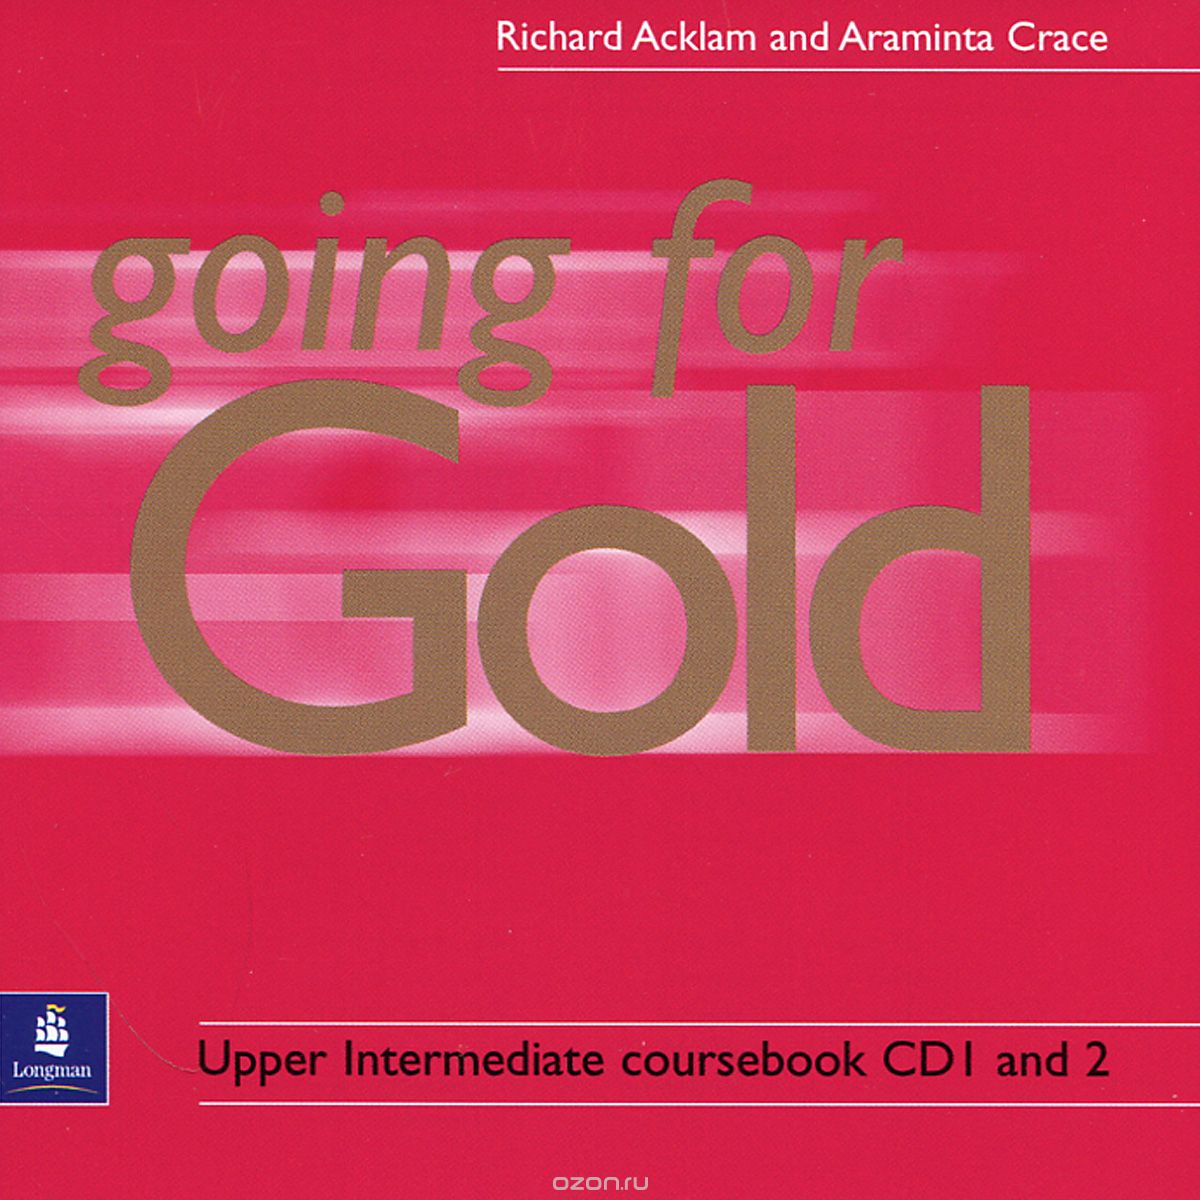 Скачать книгу "Going for Gold (аудиокурс на 2 CD)"